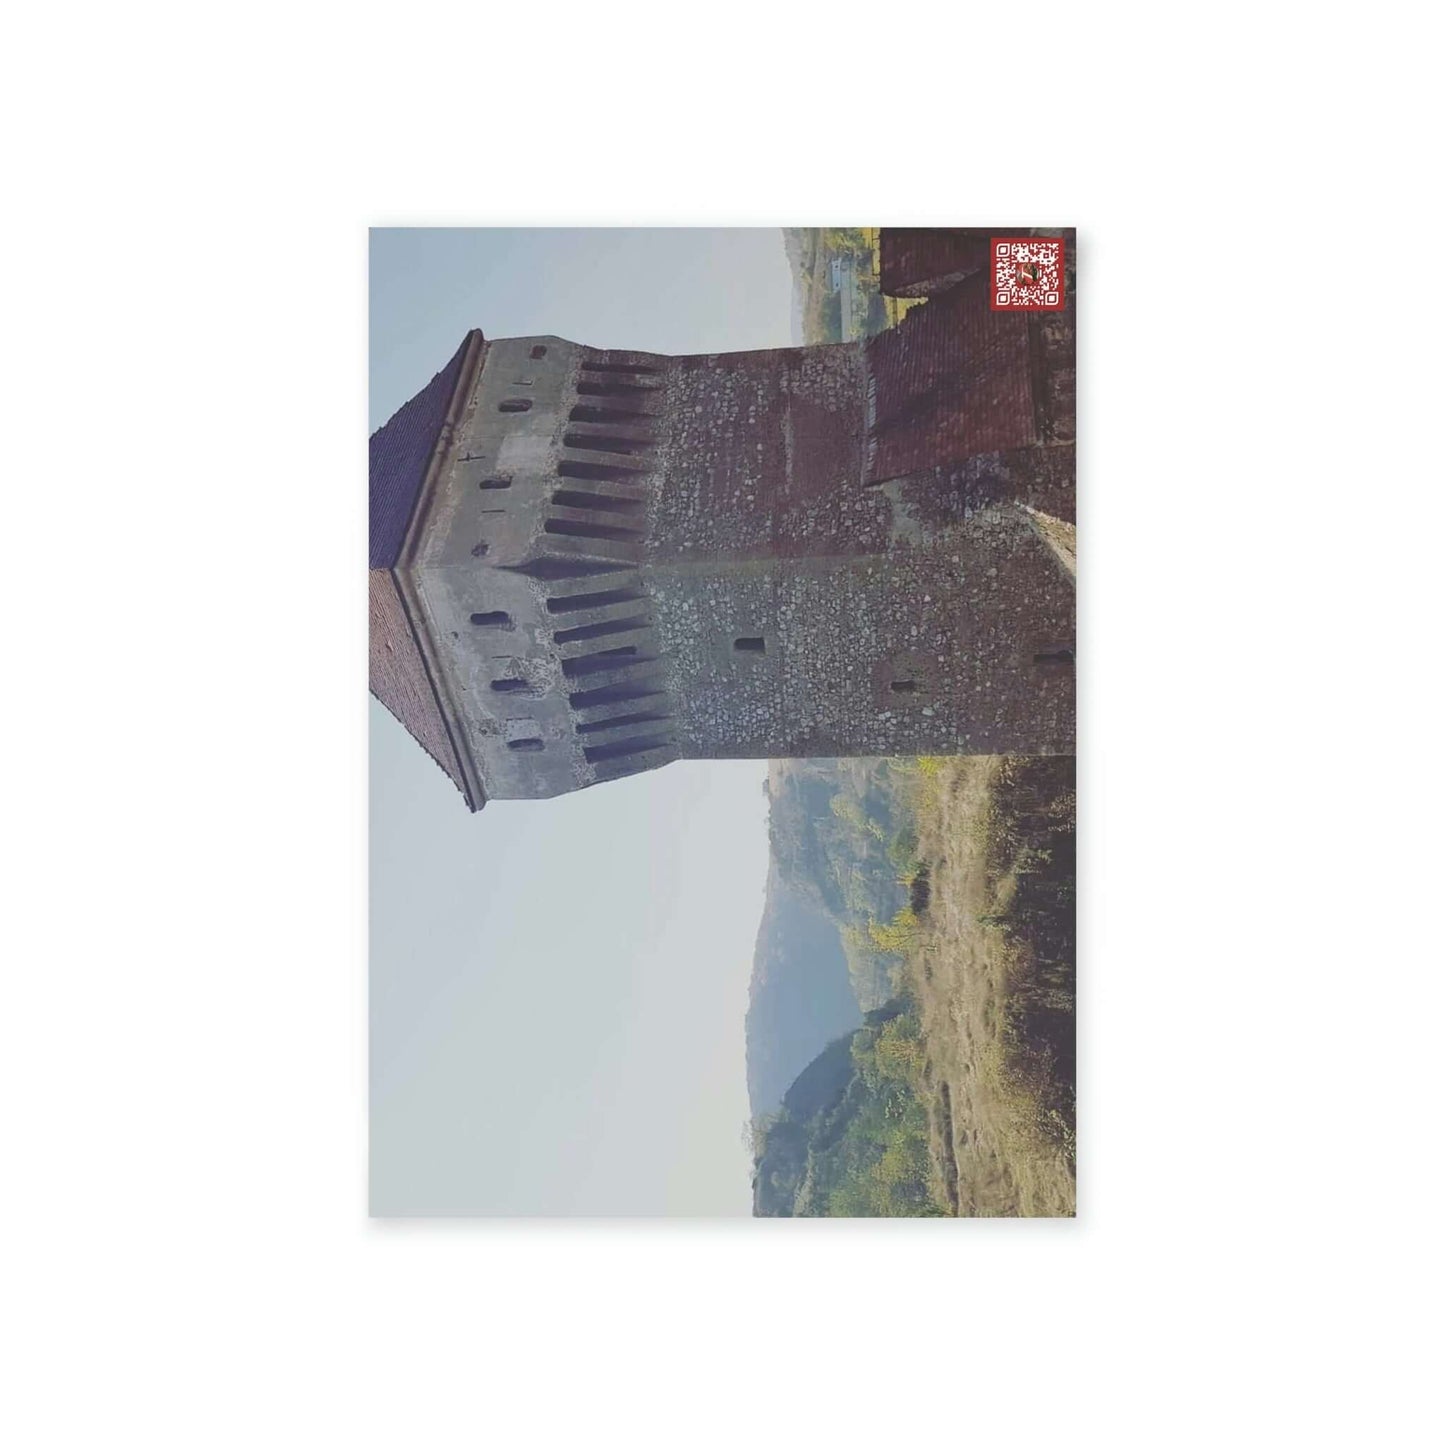 Hunedoara Castle Corvinilor | Romania | Holiday Cards